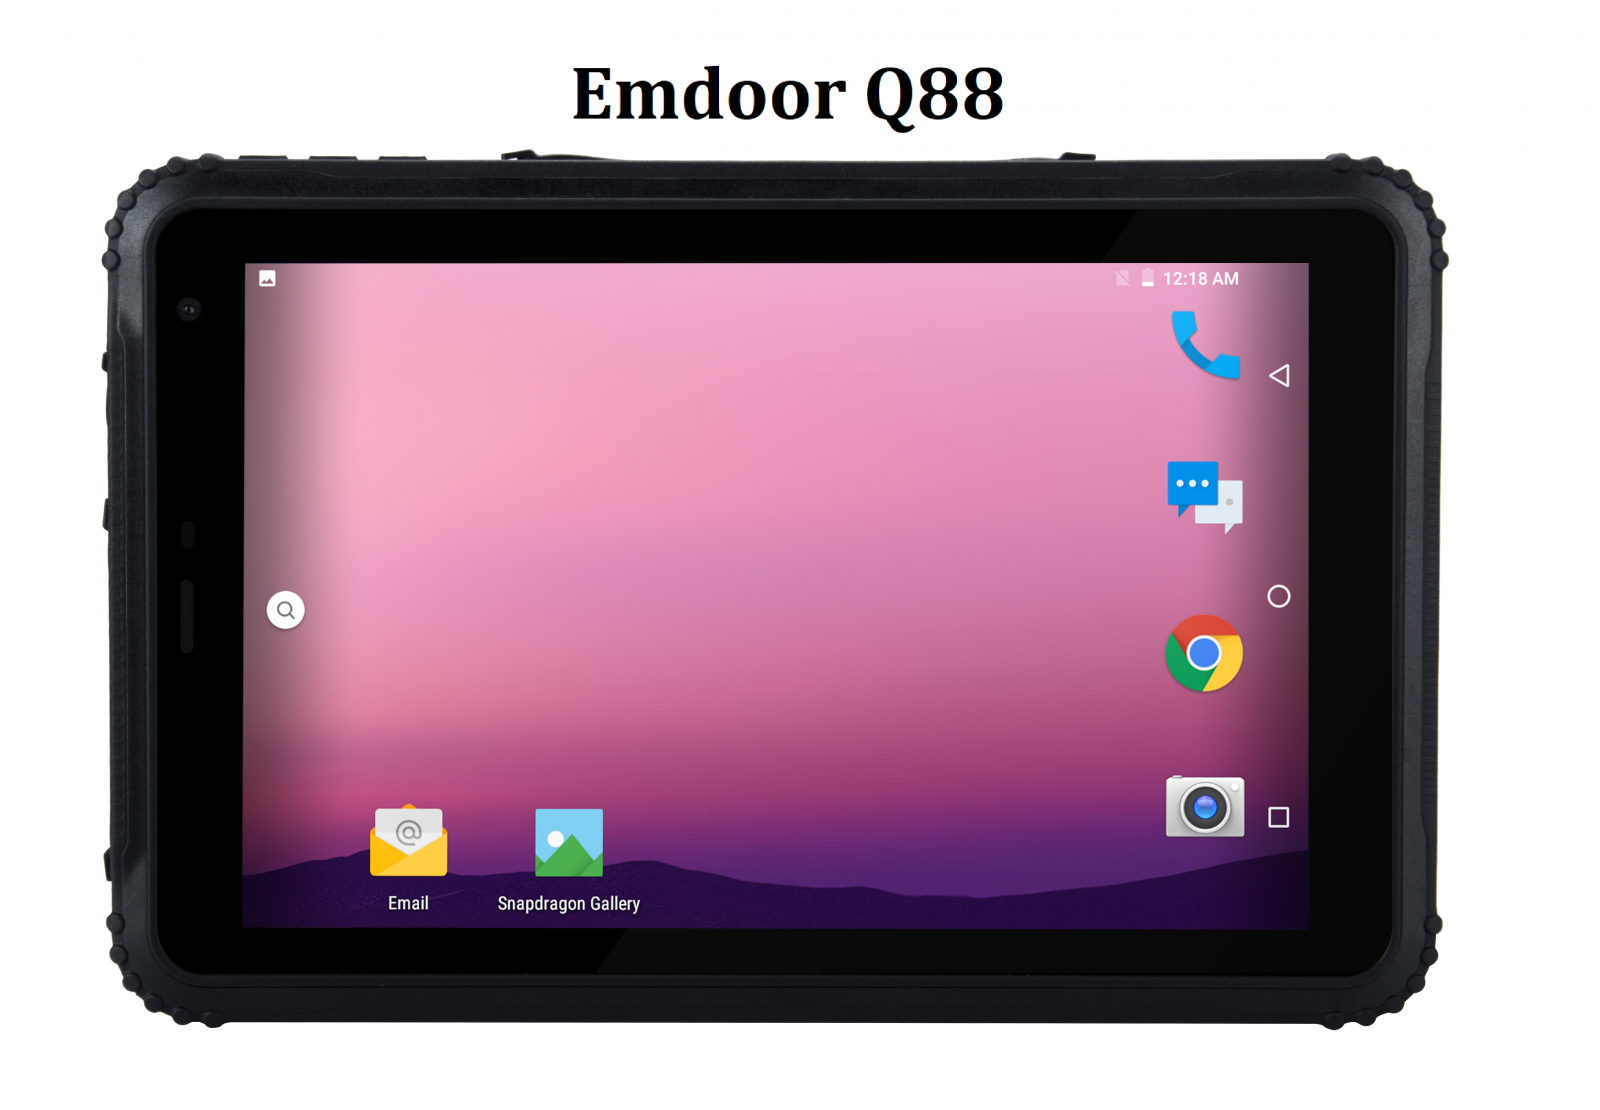 Wytrzymay tablet (IP67 + MIL-STD-810G), 4GB RAM pamici, dysk 64GB, BT 4.1, NFC, AR Film i 4G - Emdoor Q88 v.2